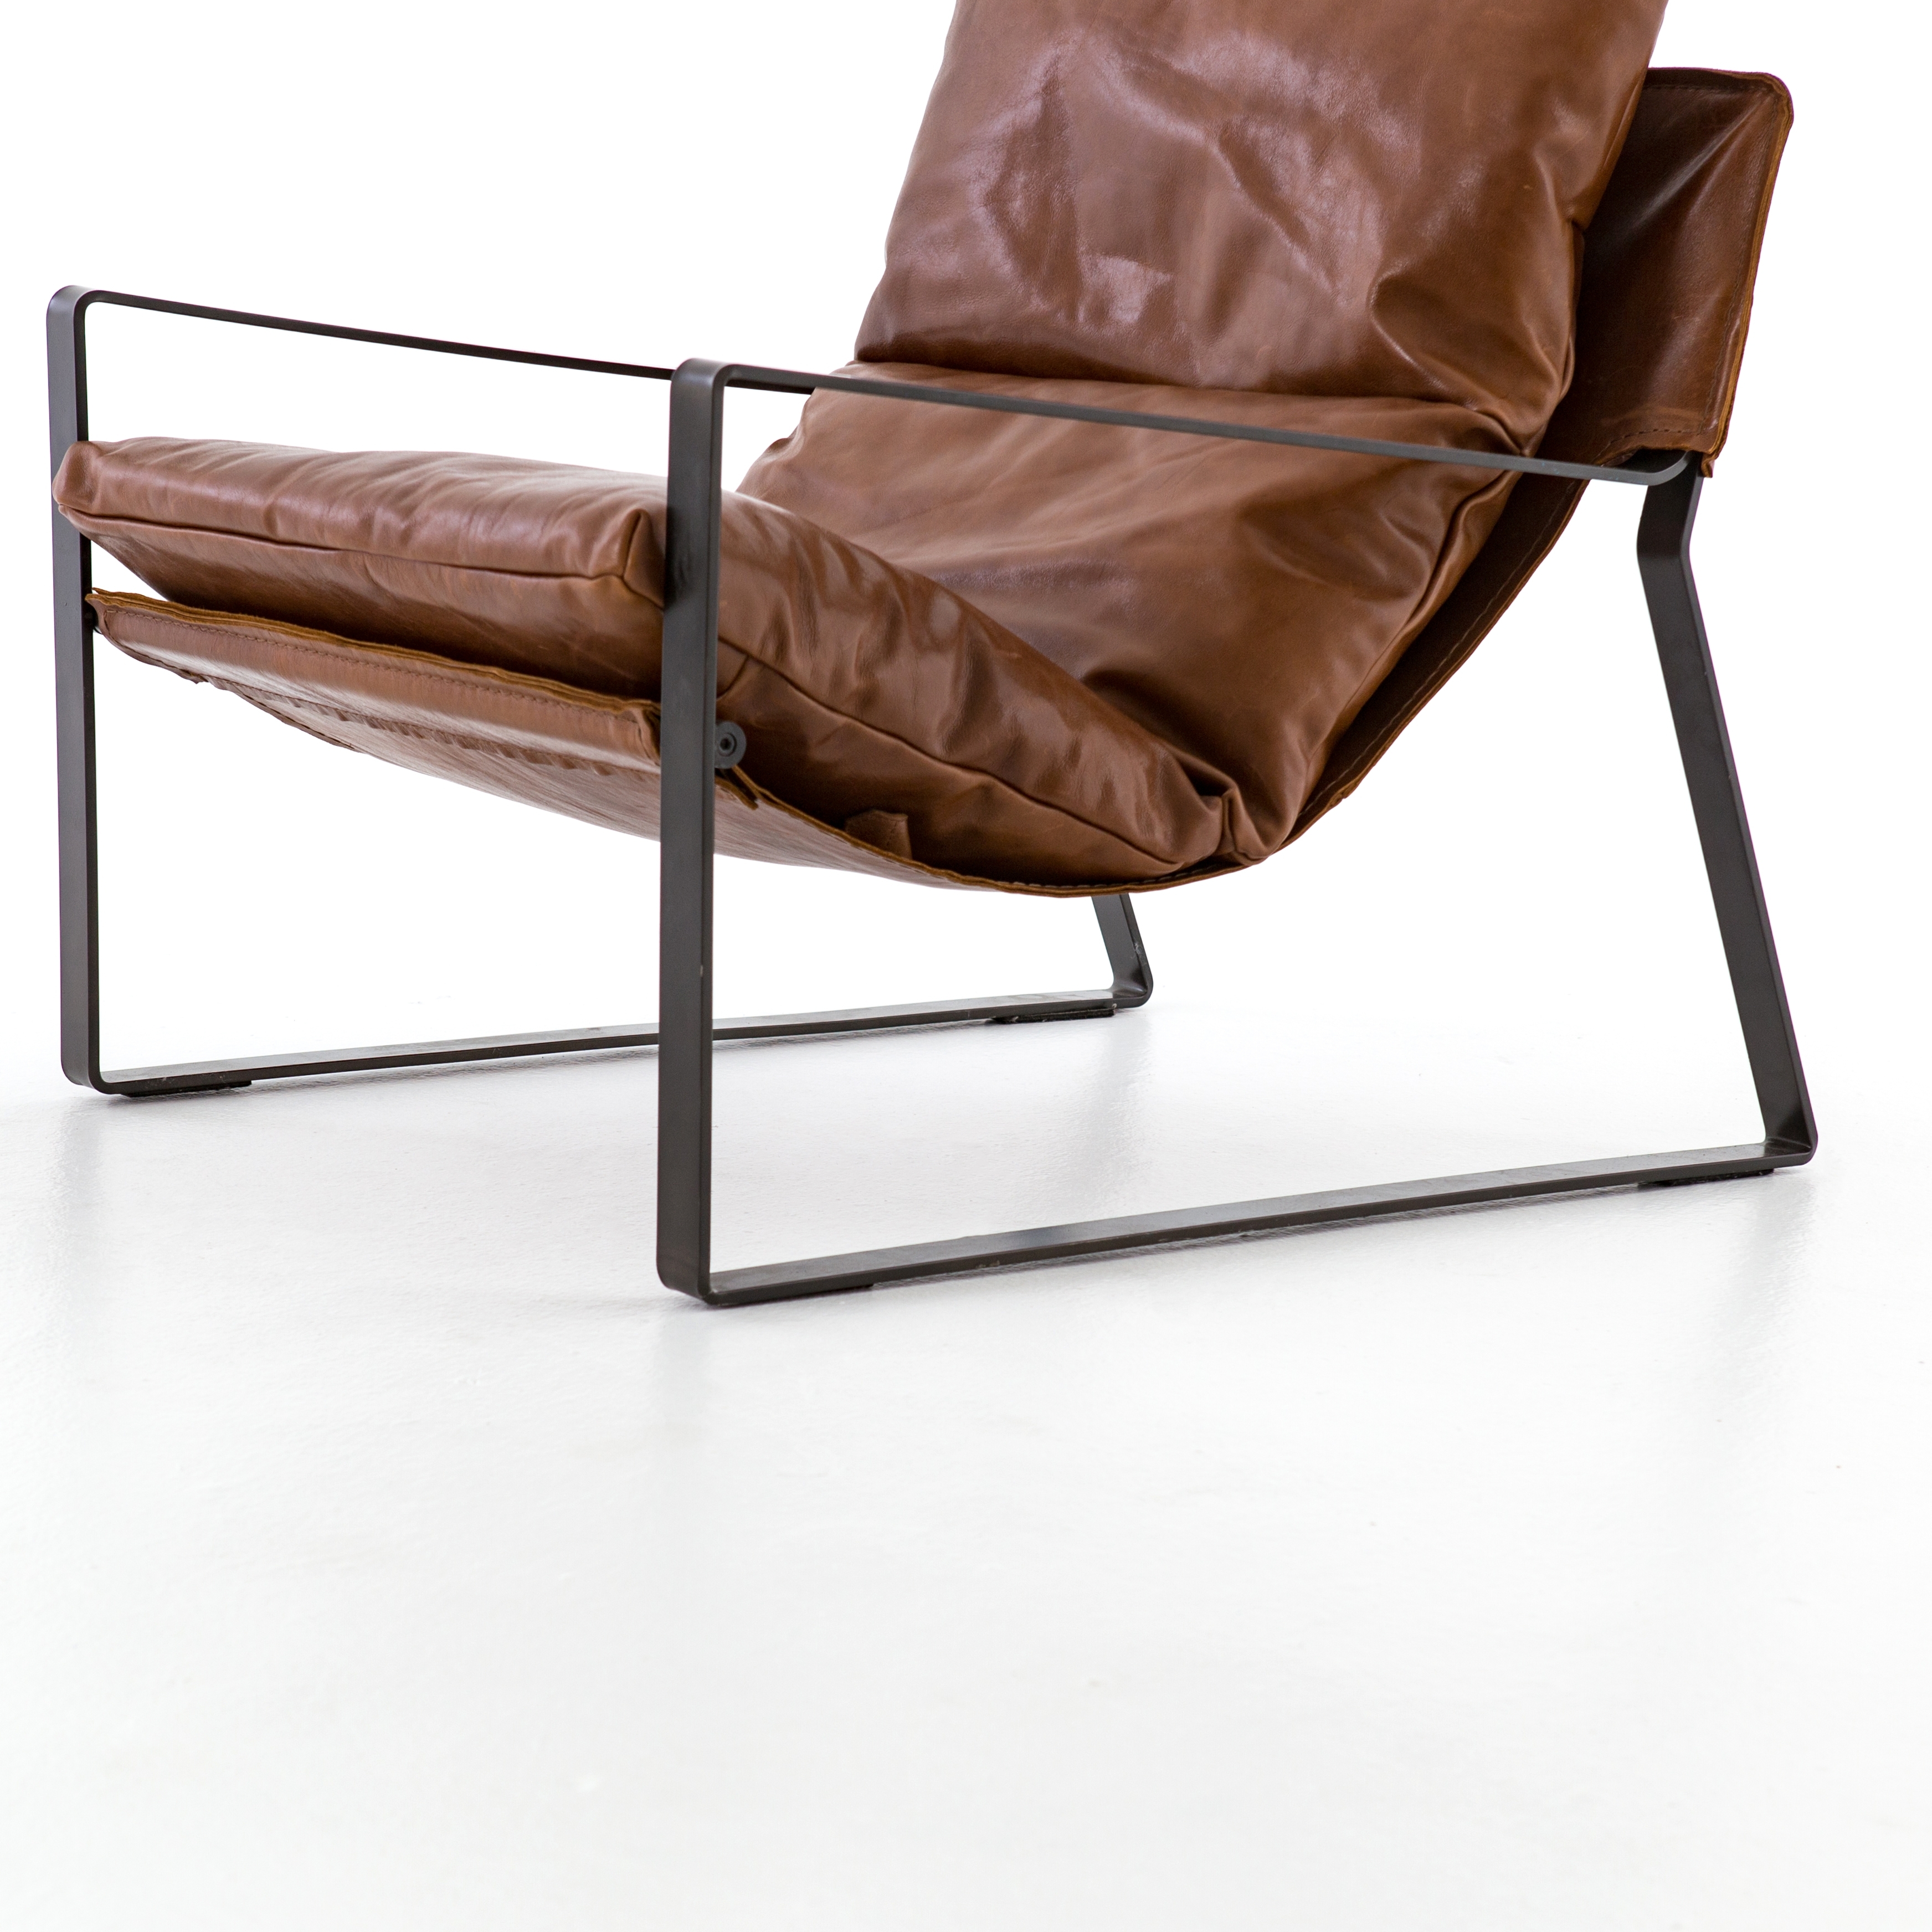 Emmett Sling Chair-Dakota Tobacco - Image 3